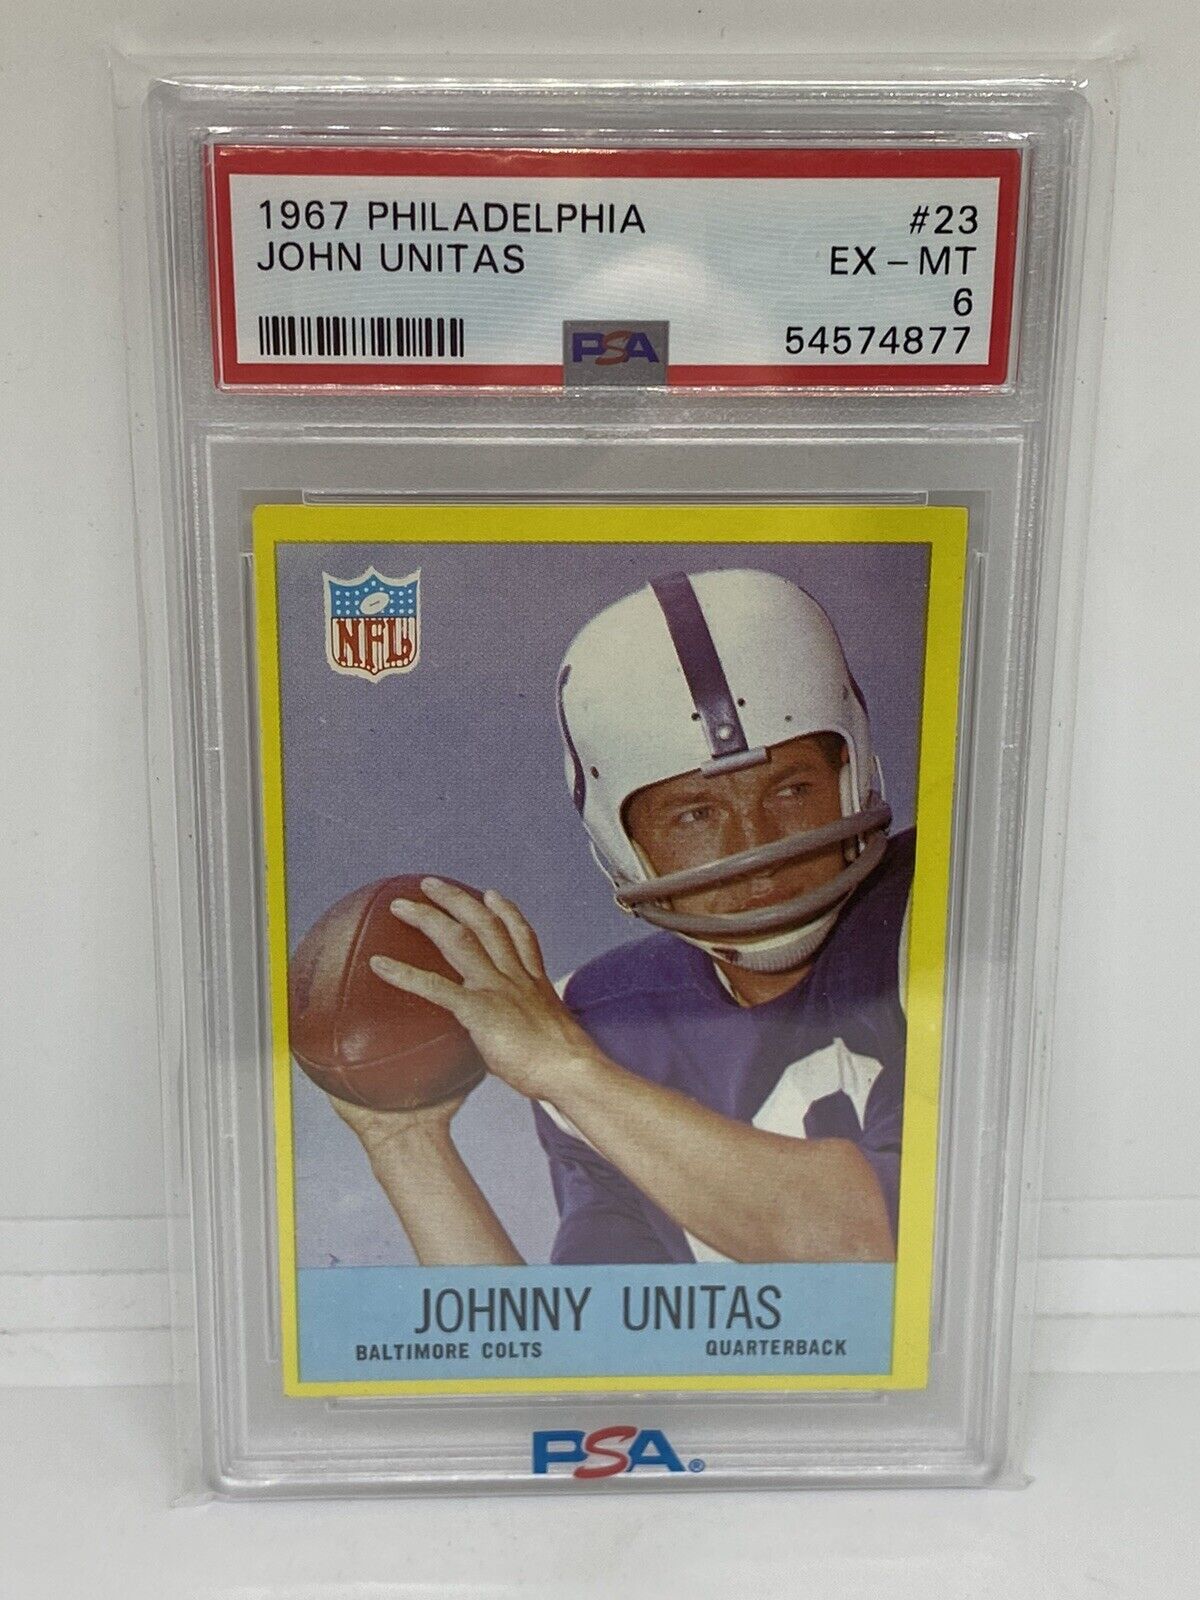 1967 Philadelphia Football #23 John Johnny Unitas Colts HOF PSA 6 EX-MT